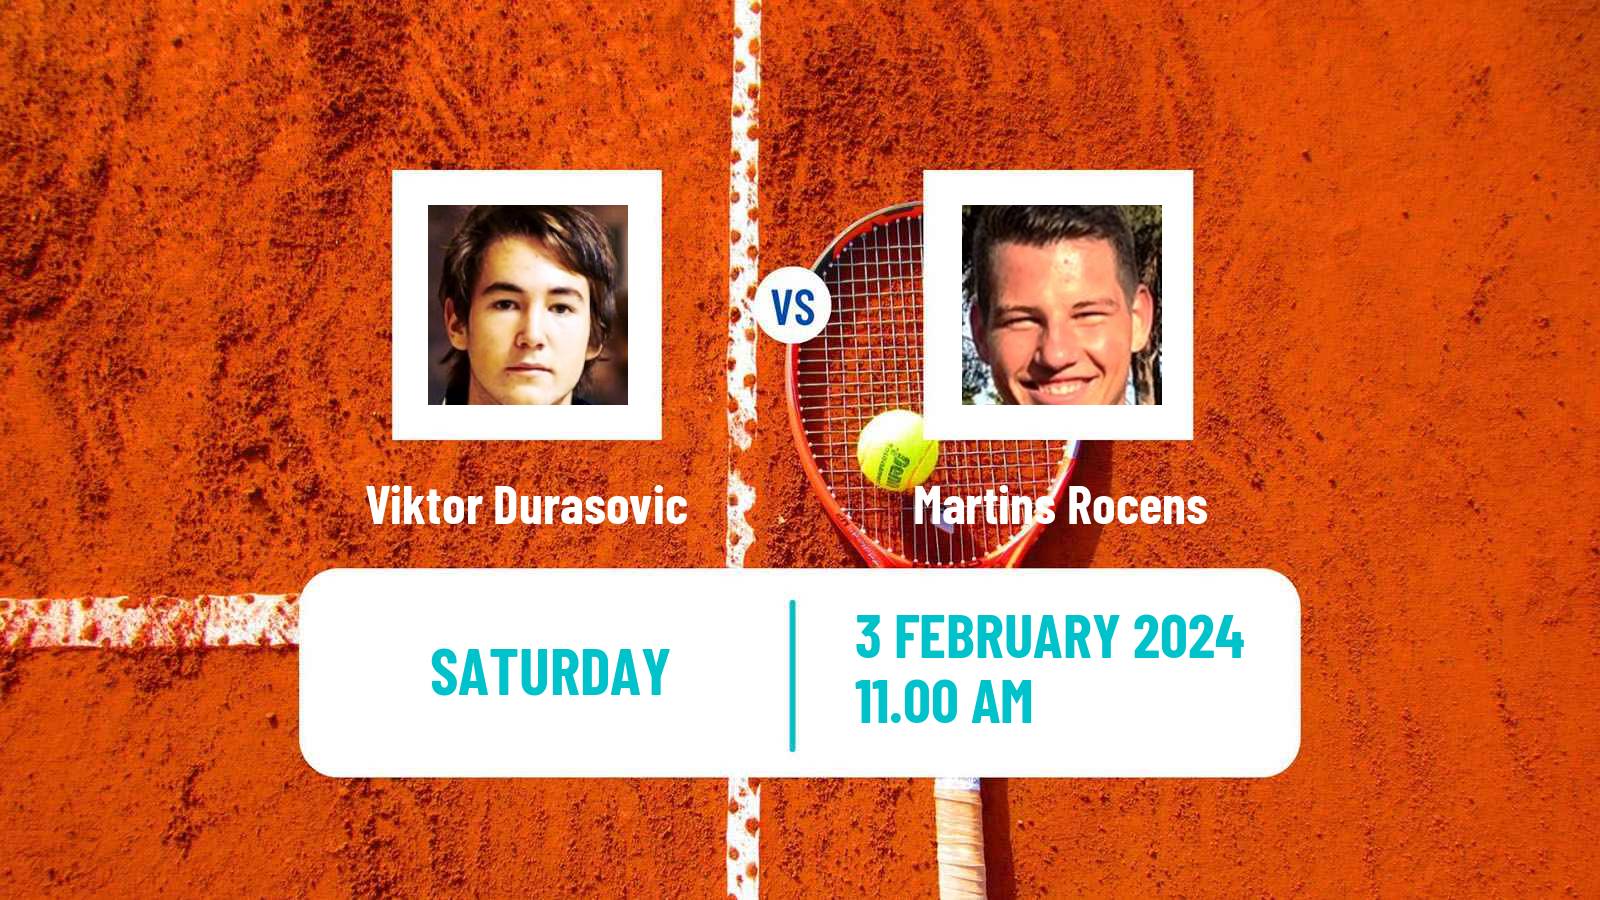 Tennis Davis Cup World Group I Viktor Durasovic - Martins Rocens